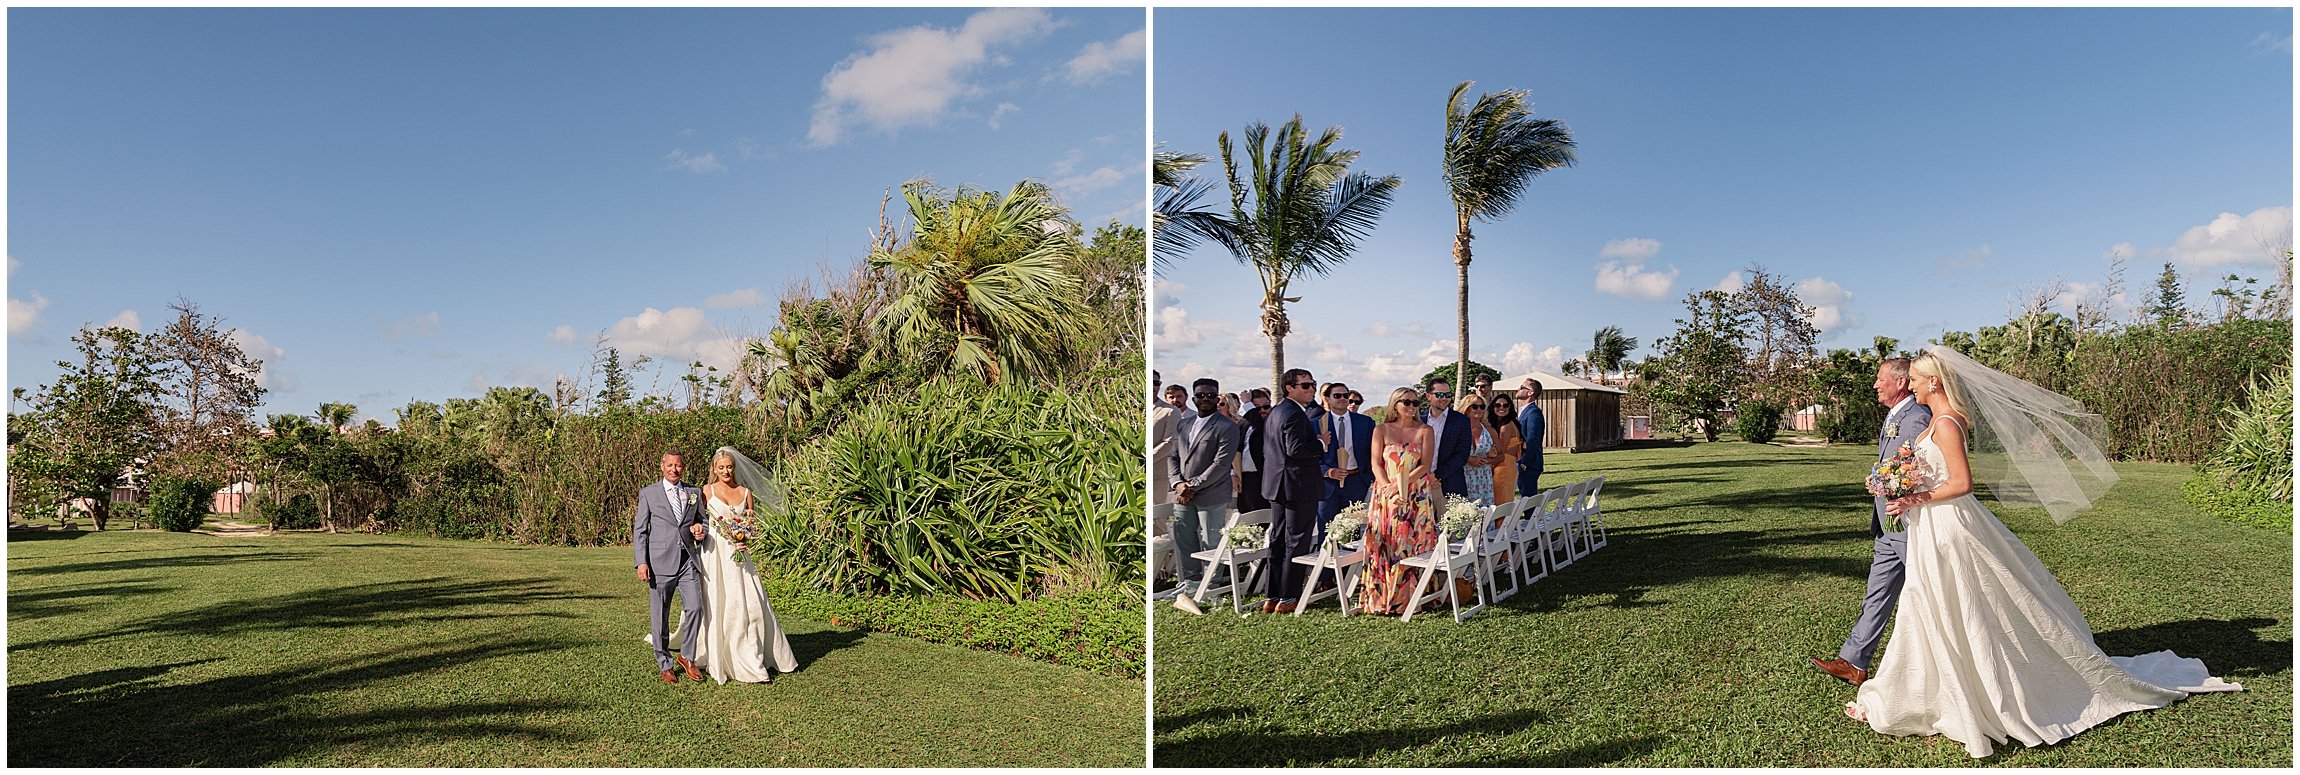 Bermuda Wedding Photographer_Cambridge Beaches_030.jpg